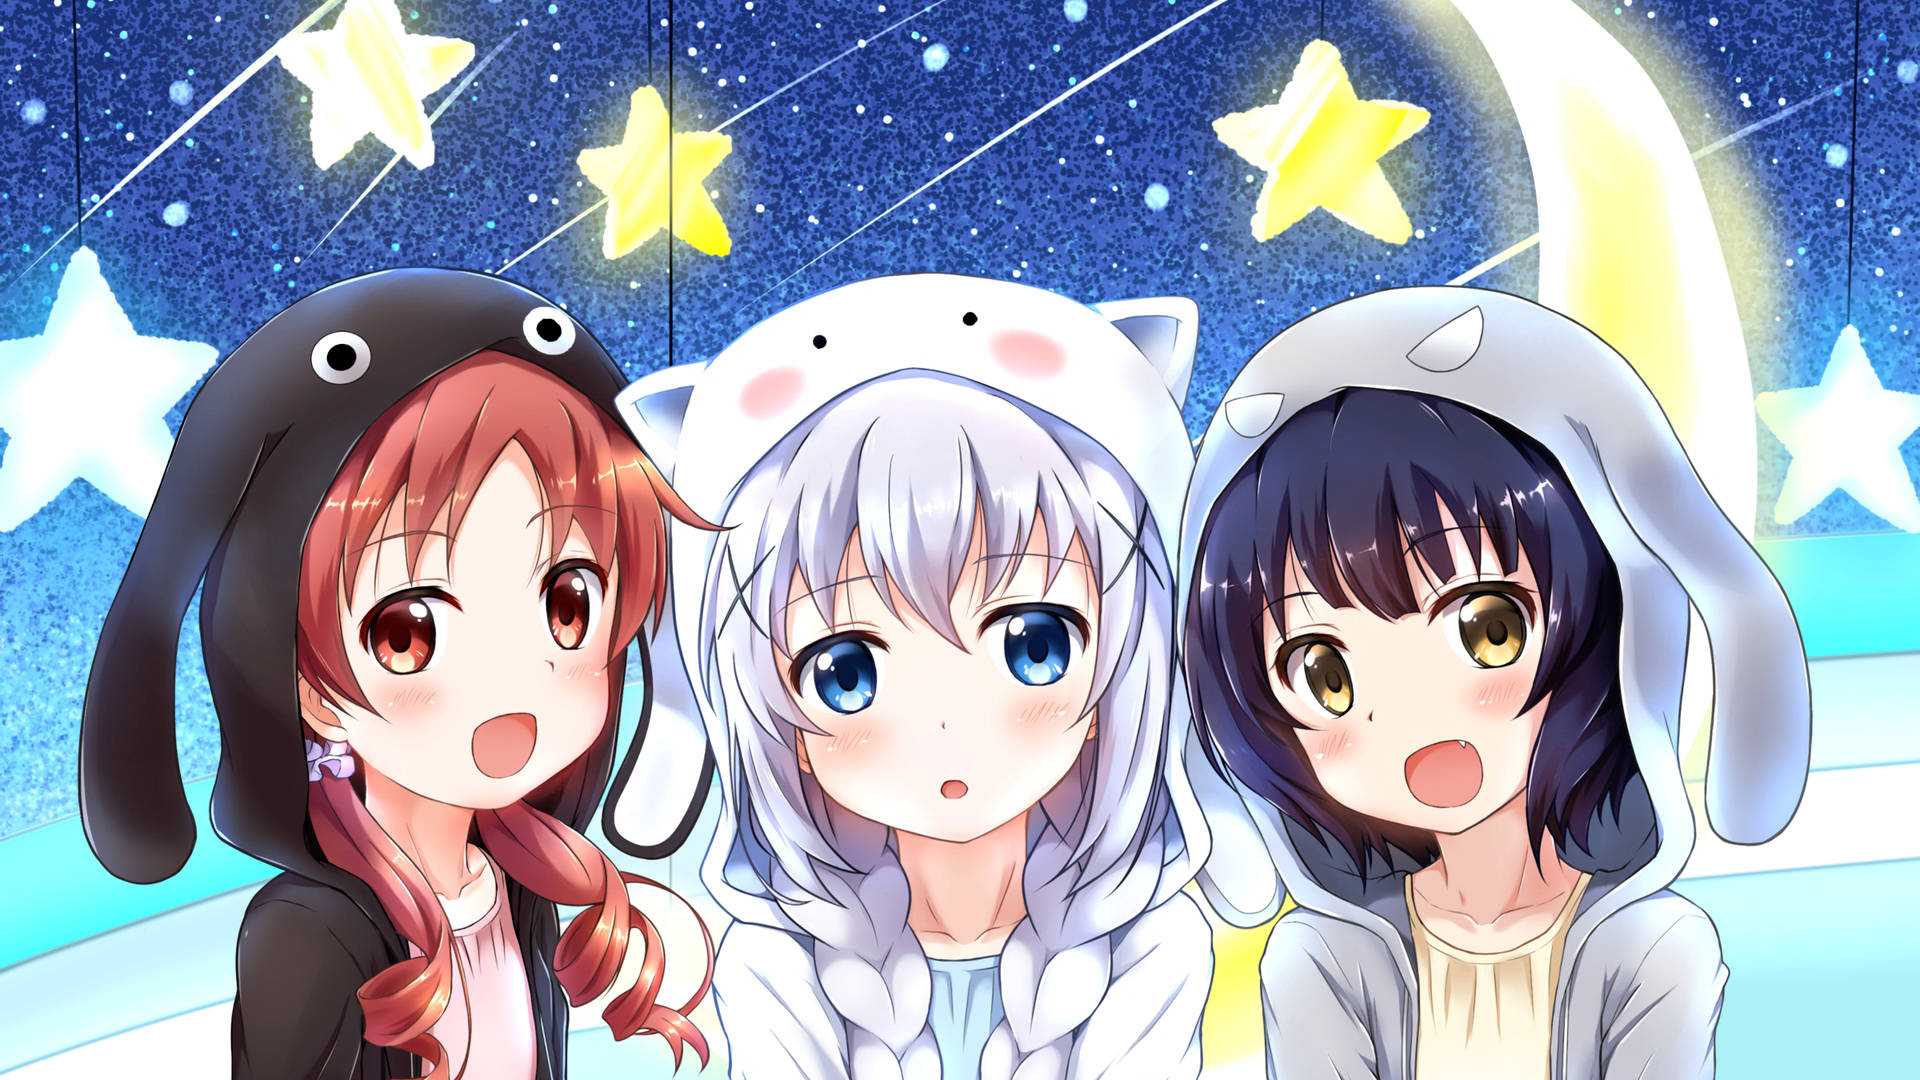 Aesthetic Anime Pfp Of Three Girls